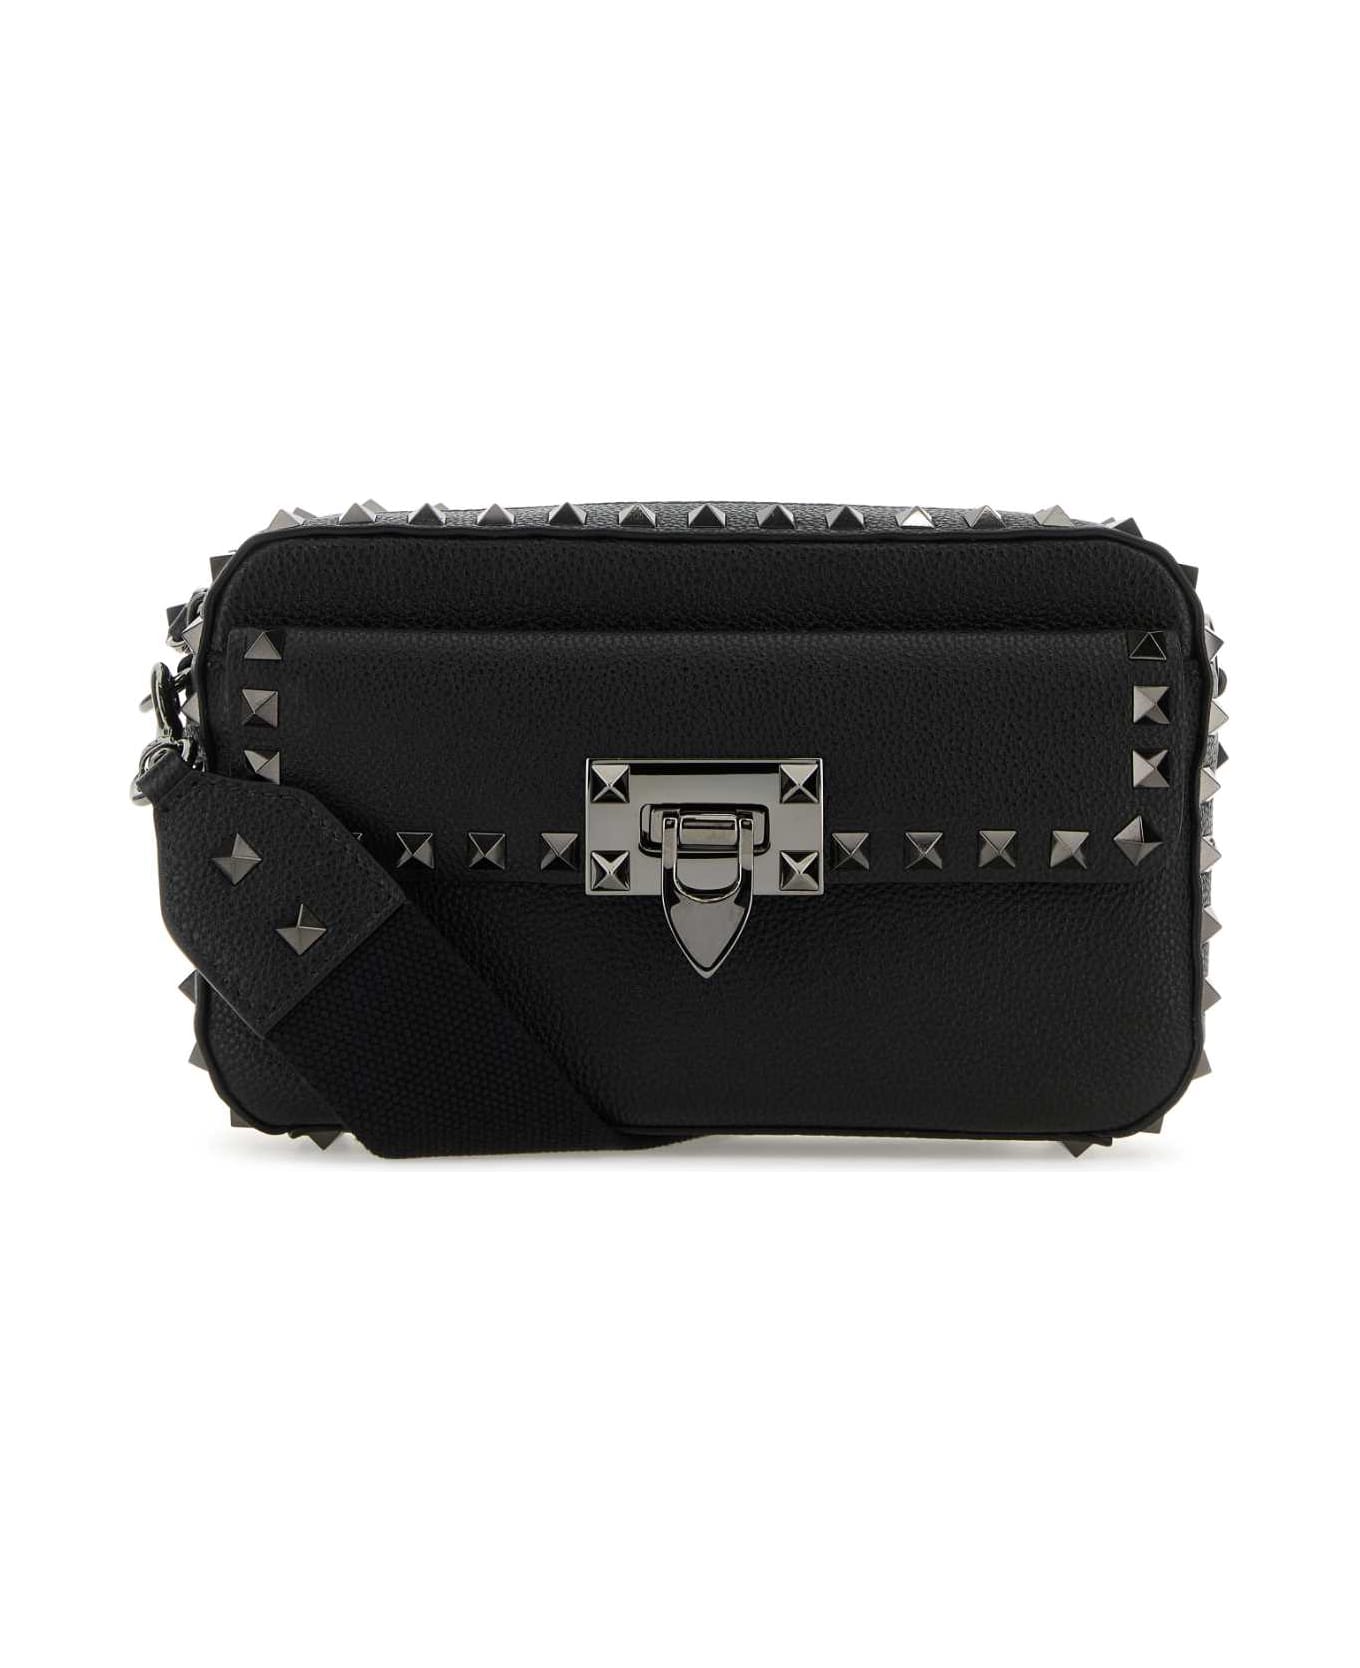 Valentino Garavani Black Leather Rockstud Crossbody Bag - NERO